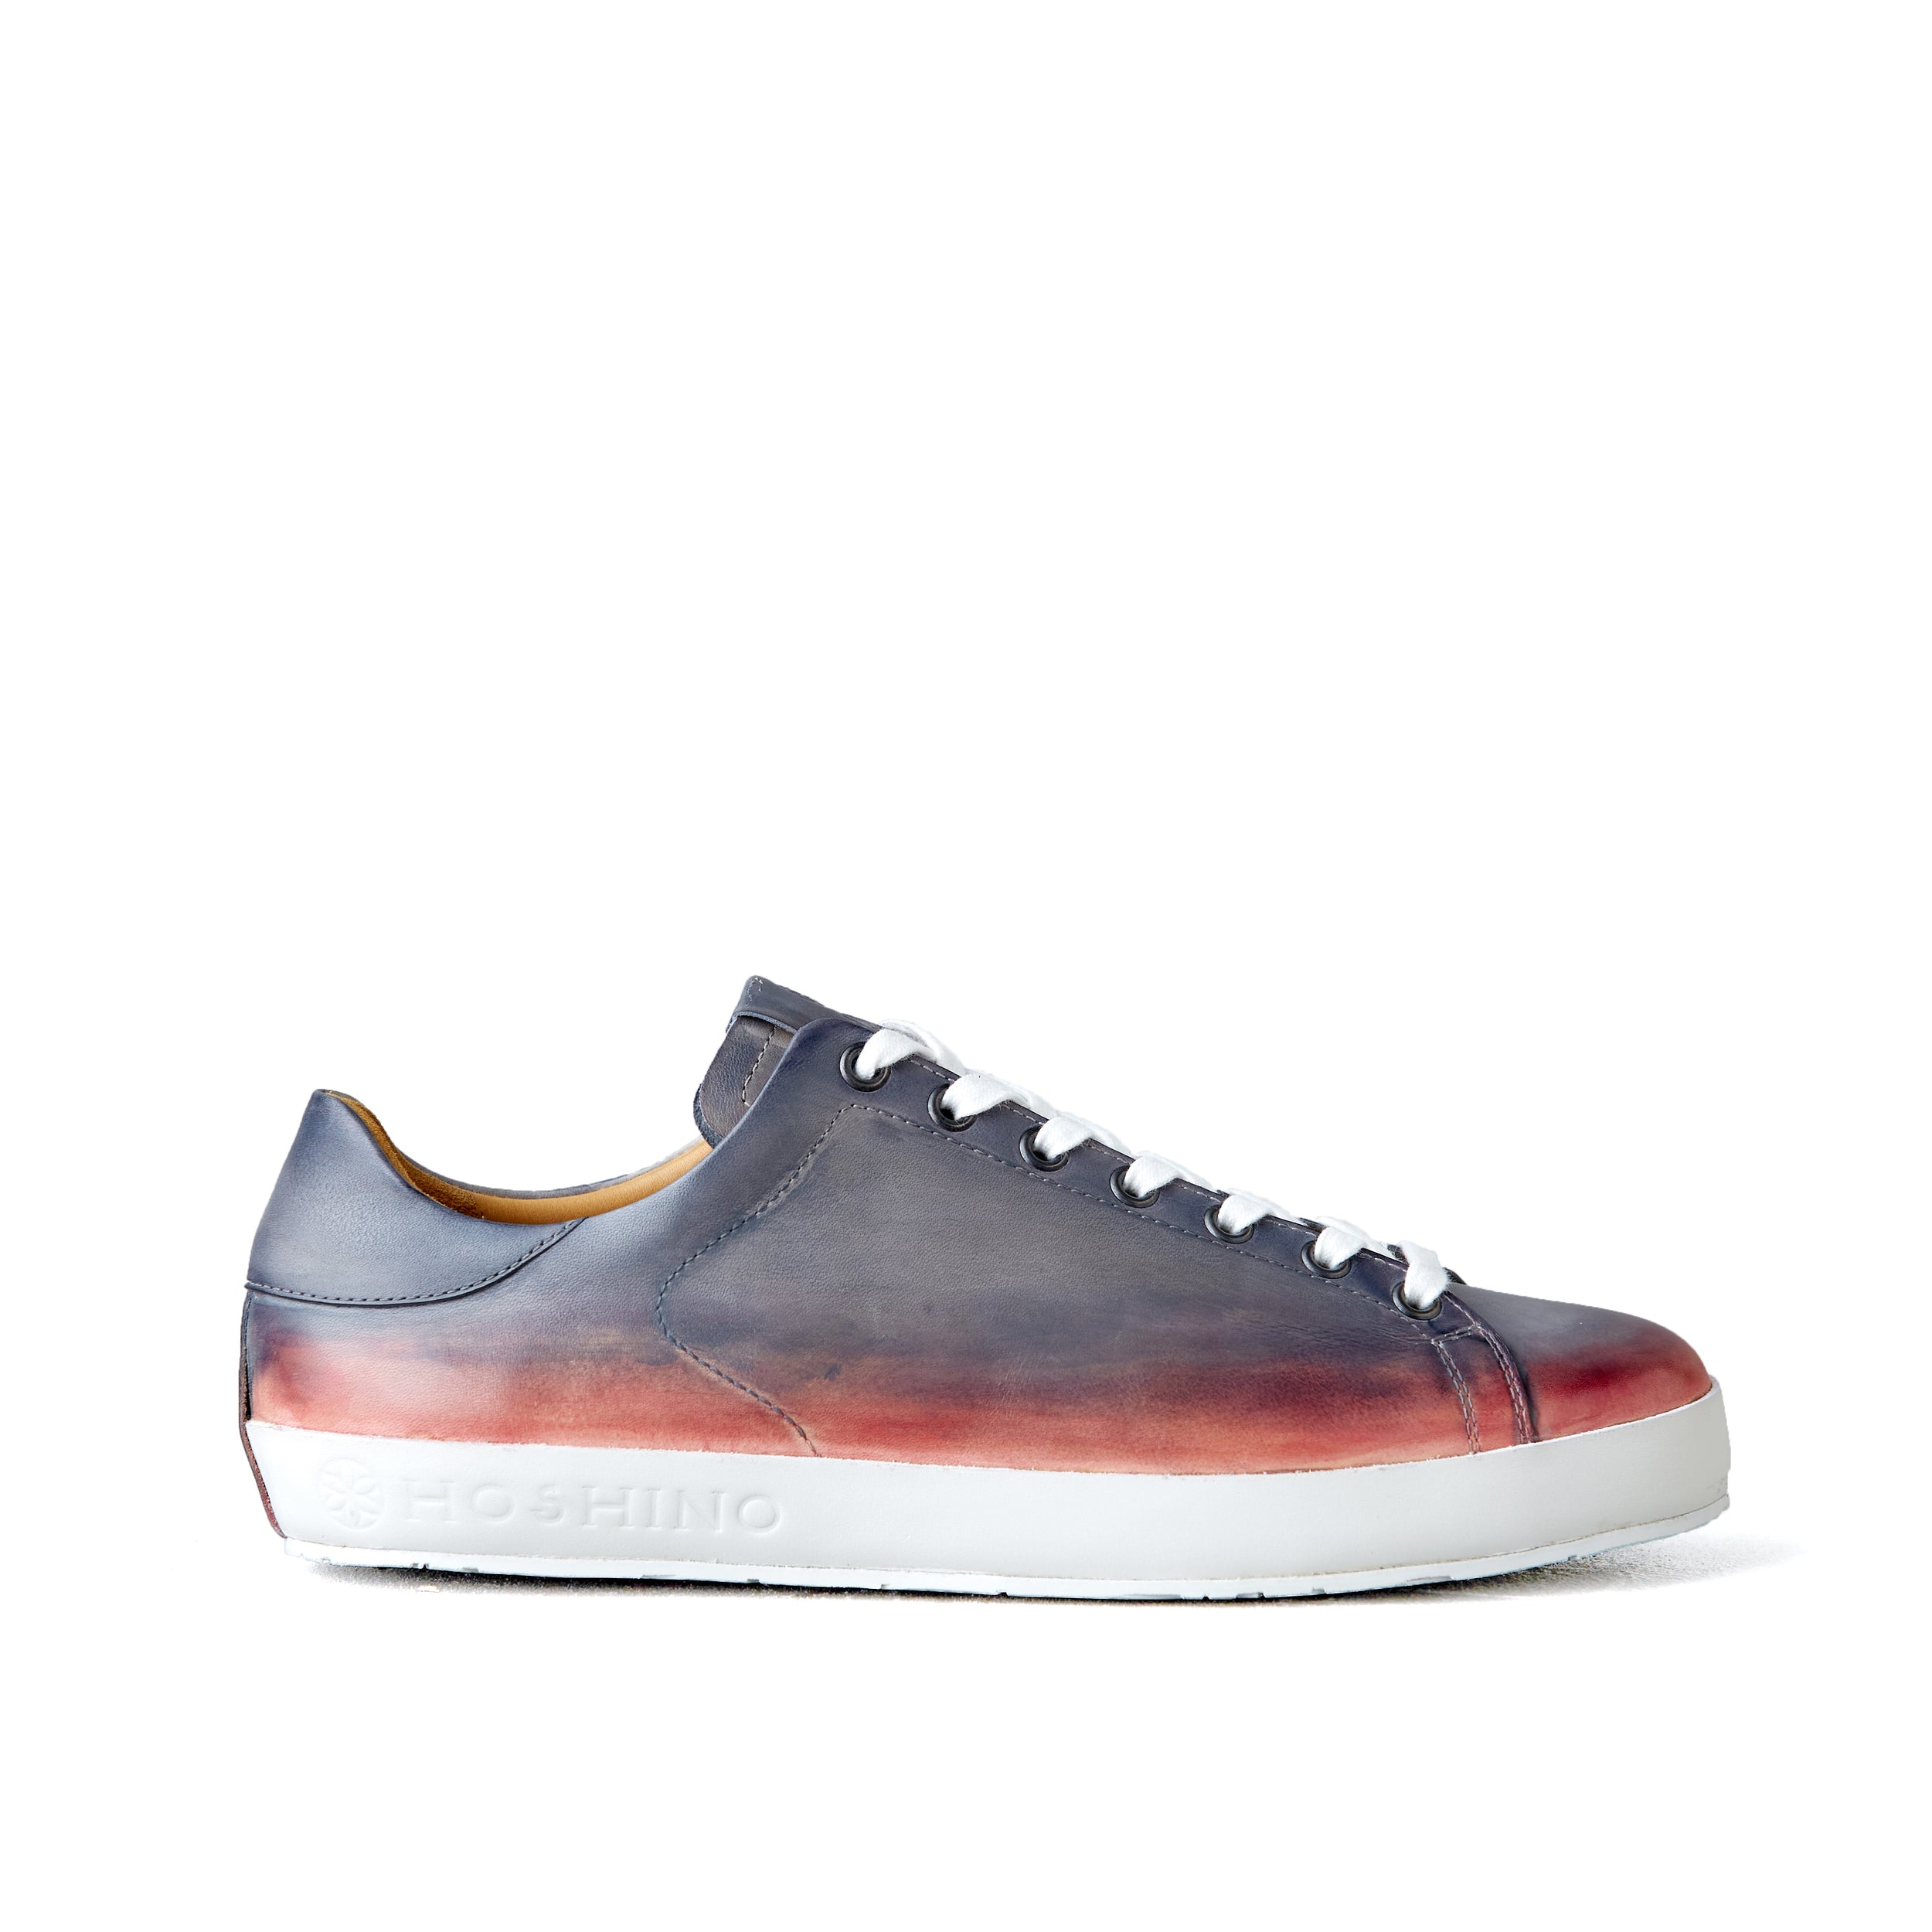 [women's] Liberte - low-top sneakers - gray x pink patina calfskin